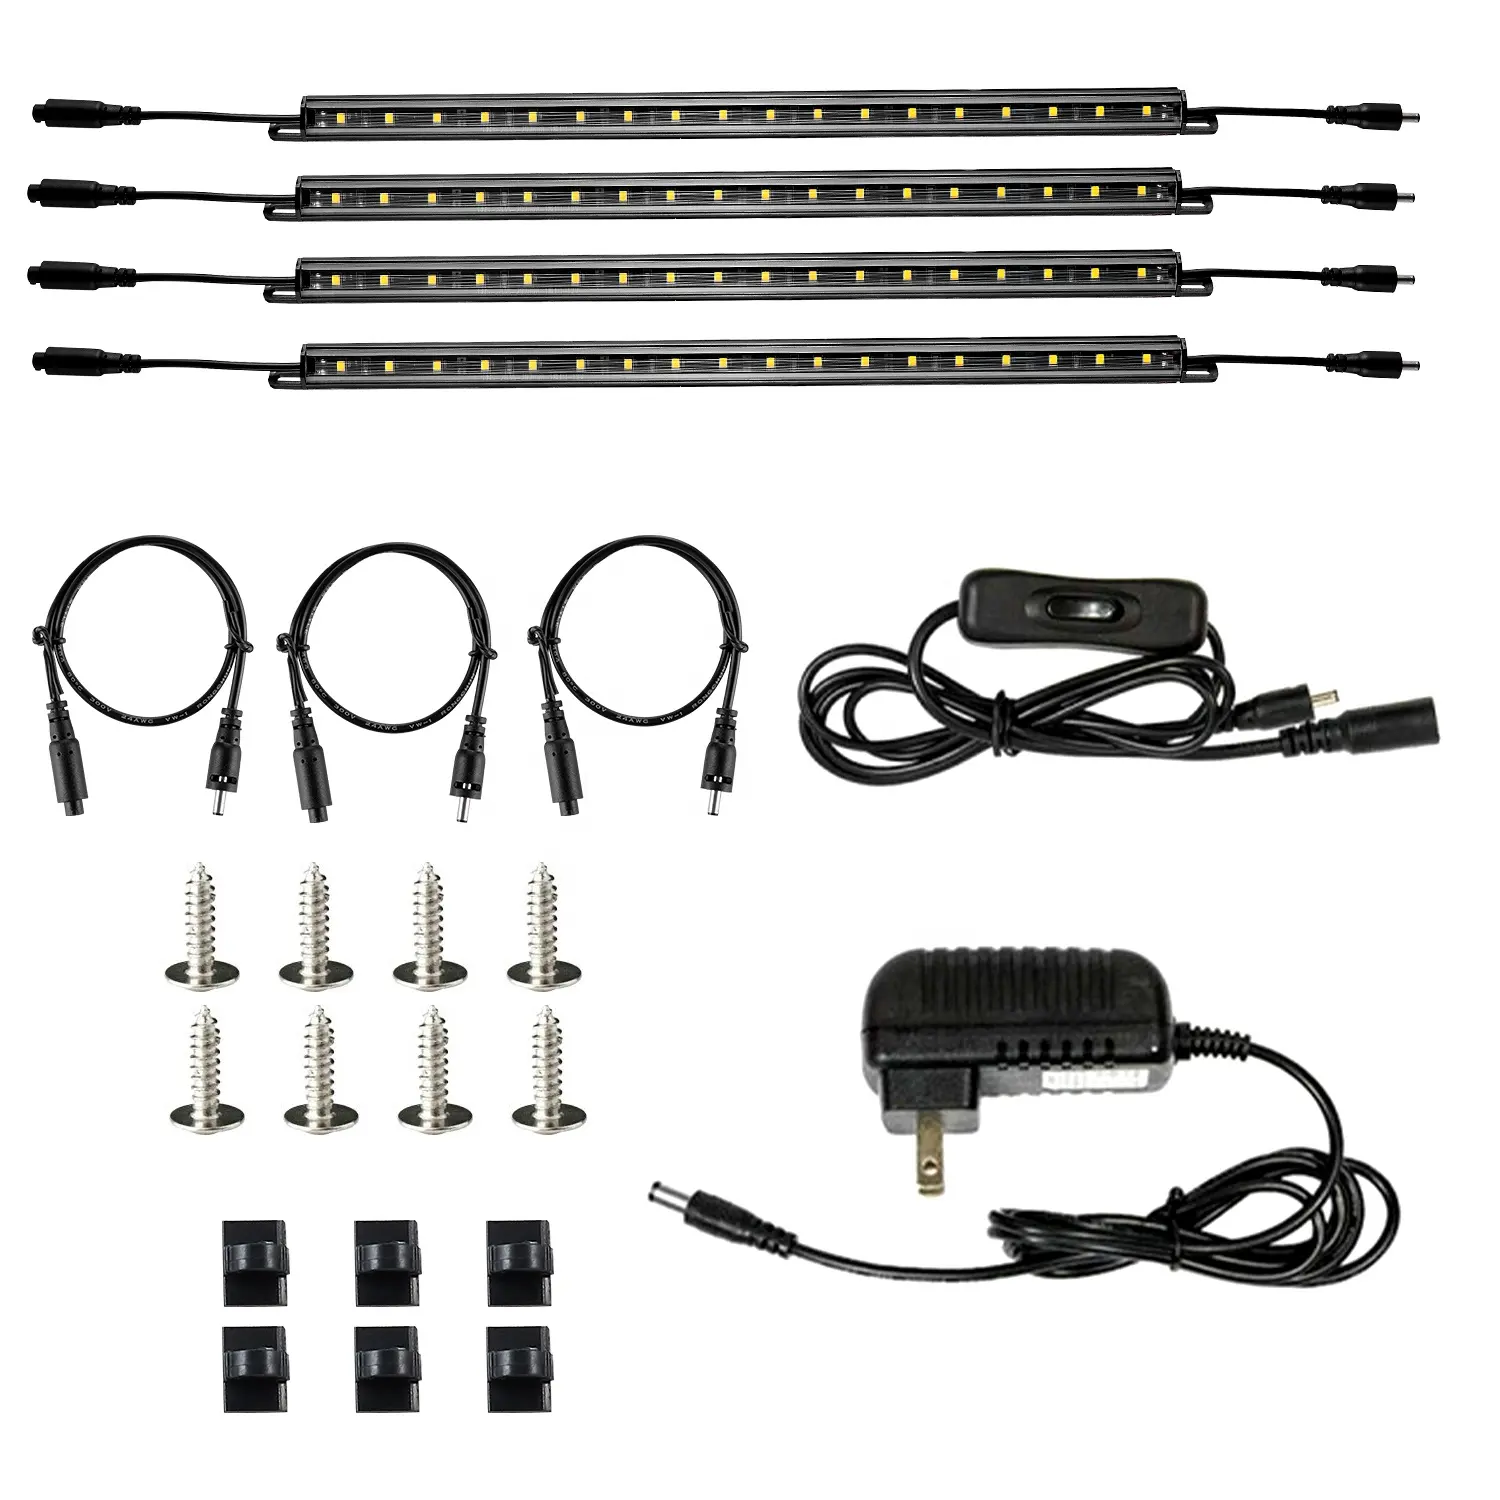 New LED Safe Lighting Kit 6 Pack Dimmer Switch 12"" Light Bars 5000K for Under Cabinet Gun Safe Closet Kitchen Shelf